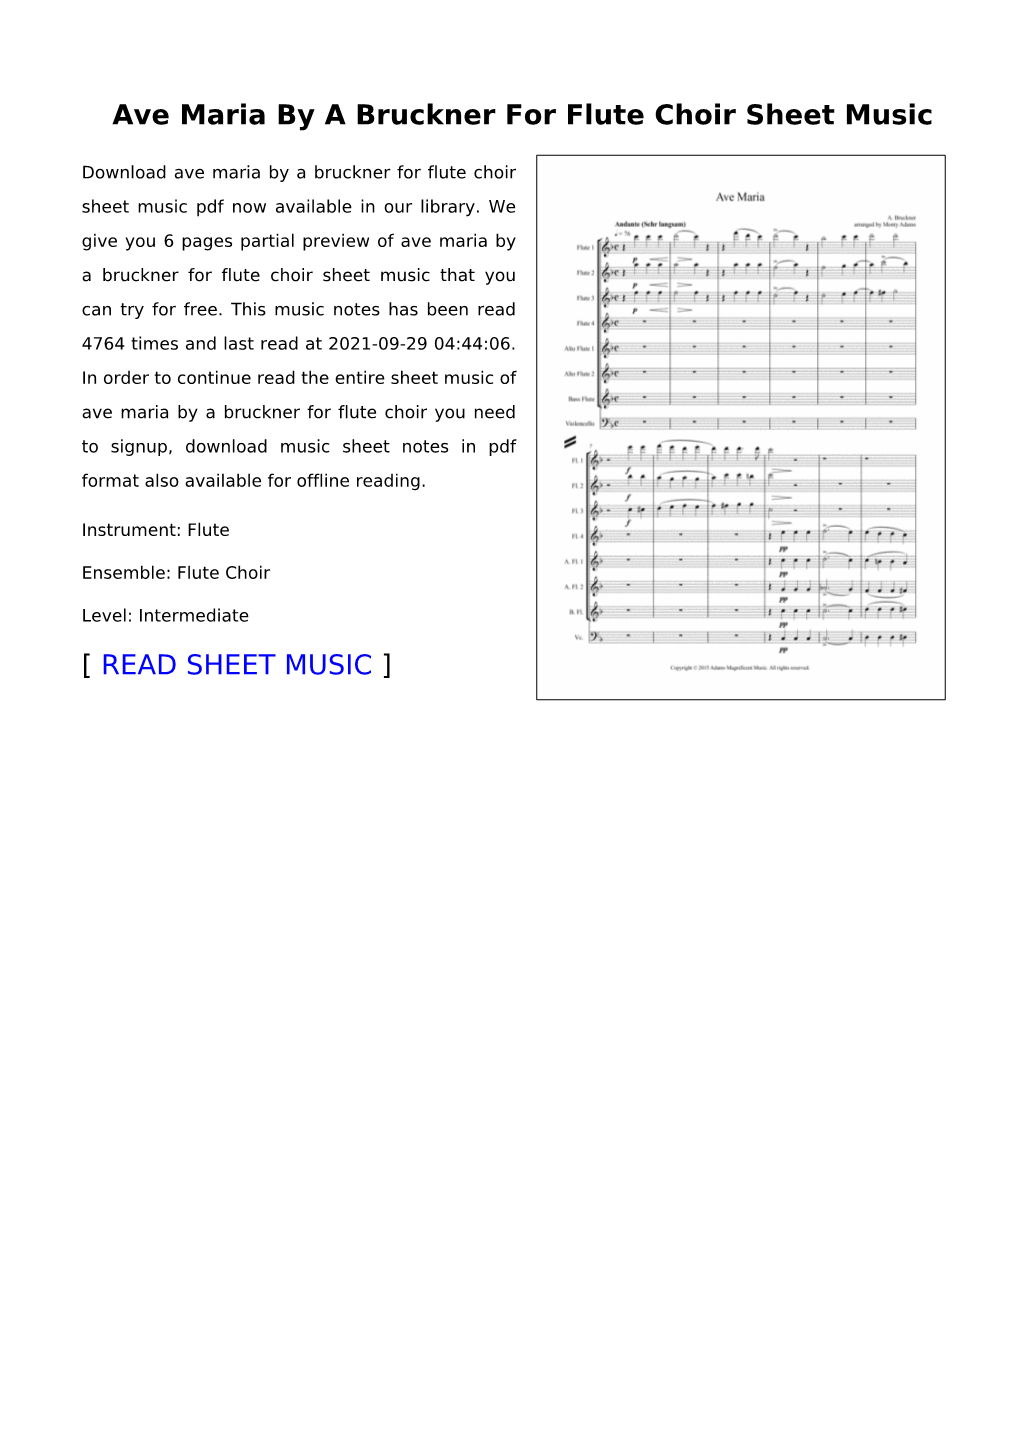 Ave Maria by a Bruckner for Flute Choir Sheet Music